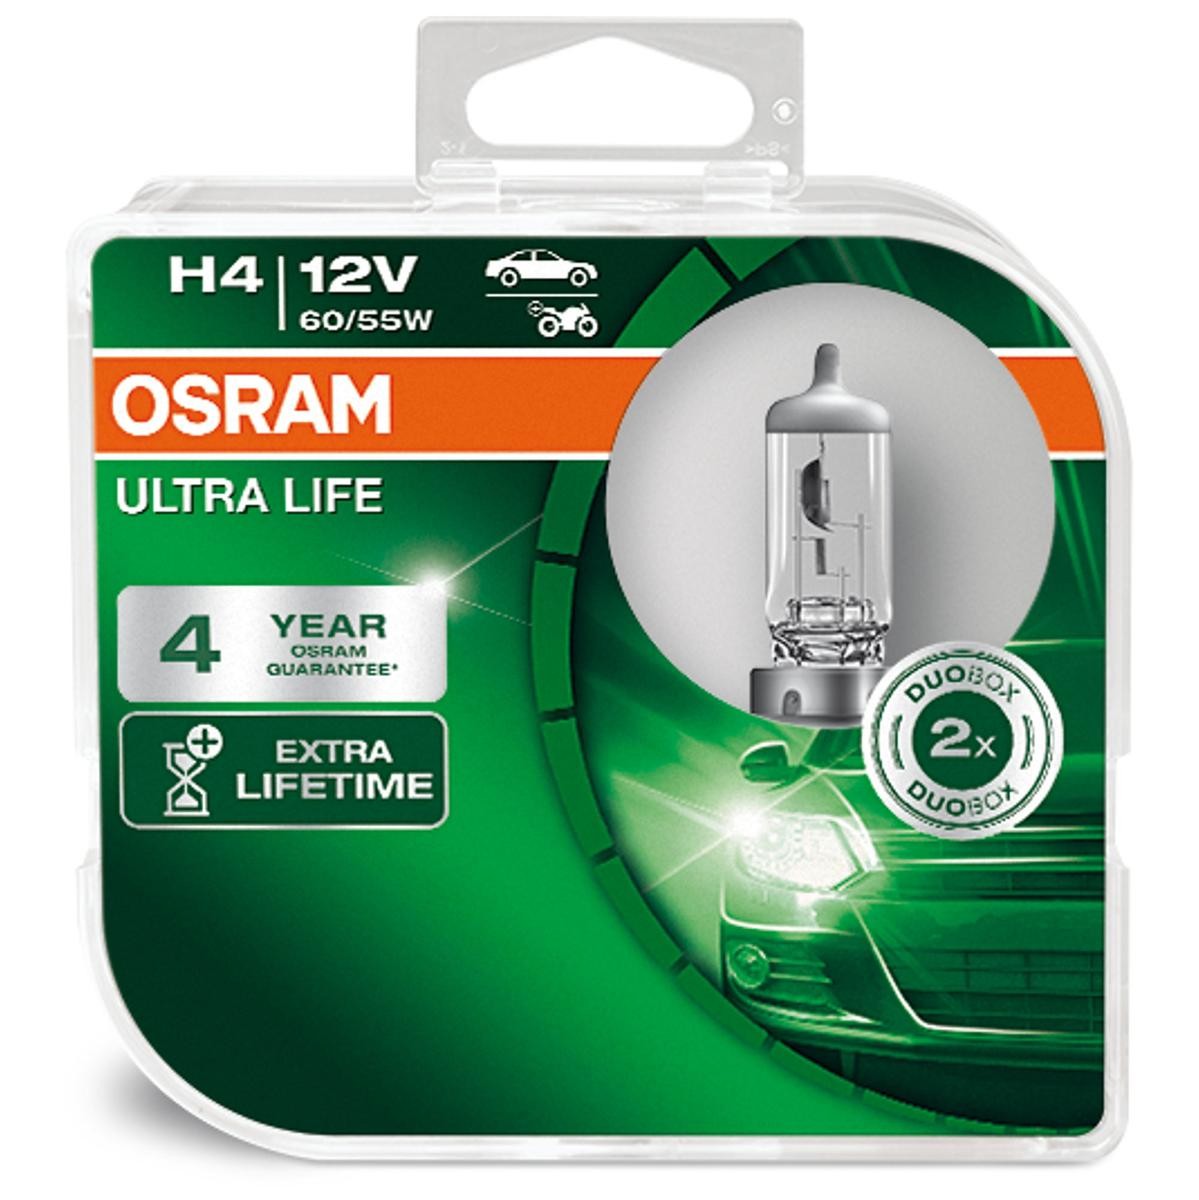 64193ULT-HCB OSRAM ULTRA LIFE H4 12V 60/55W 3200K Halogen Glühlampe,  Fernscheinwerfer